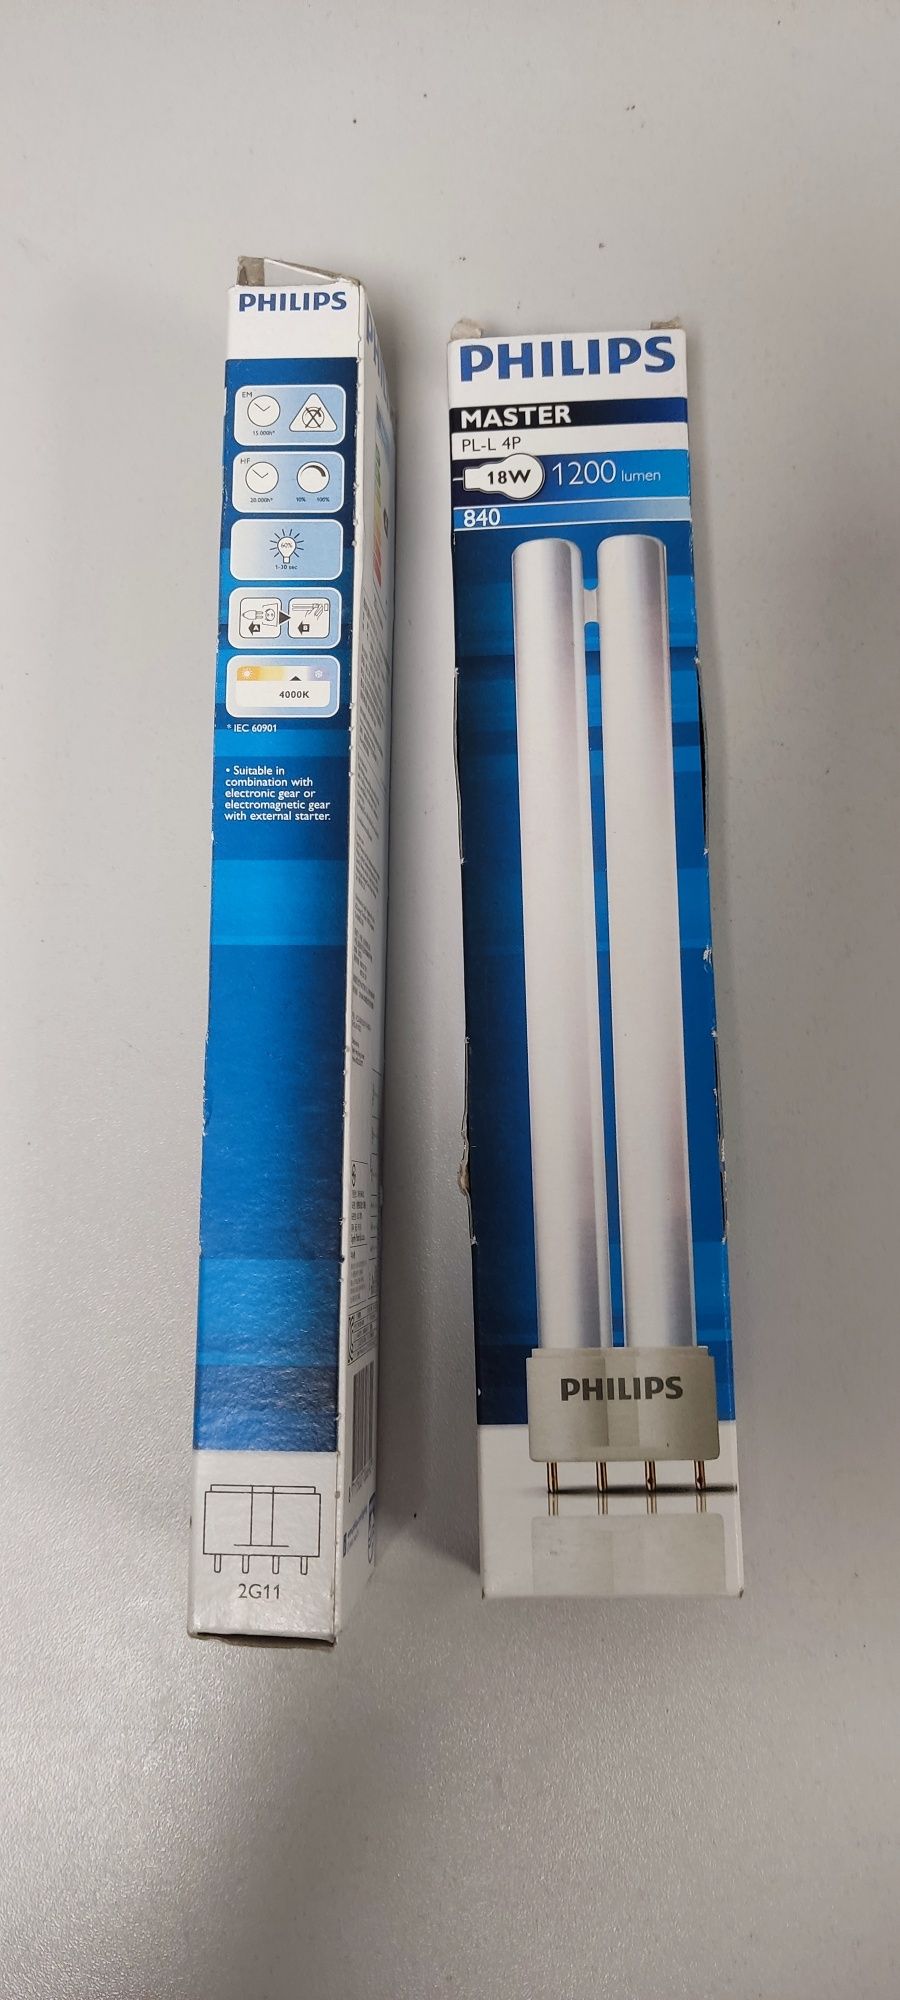 Zarowki swietlowki Philips pl-l-4p